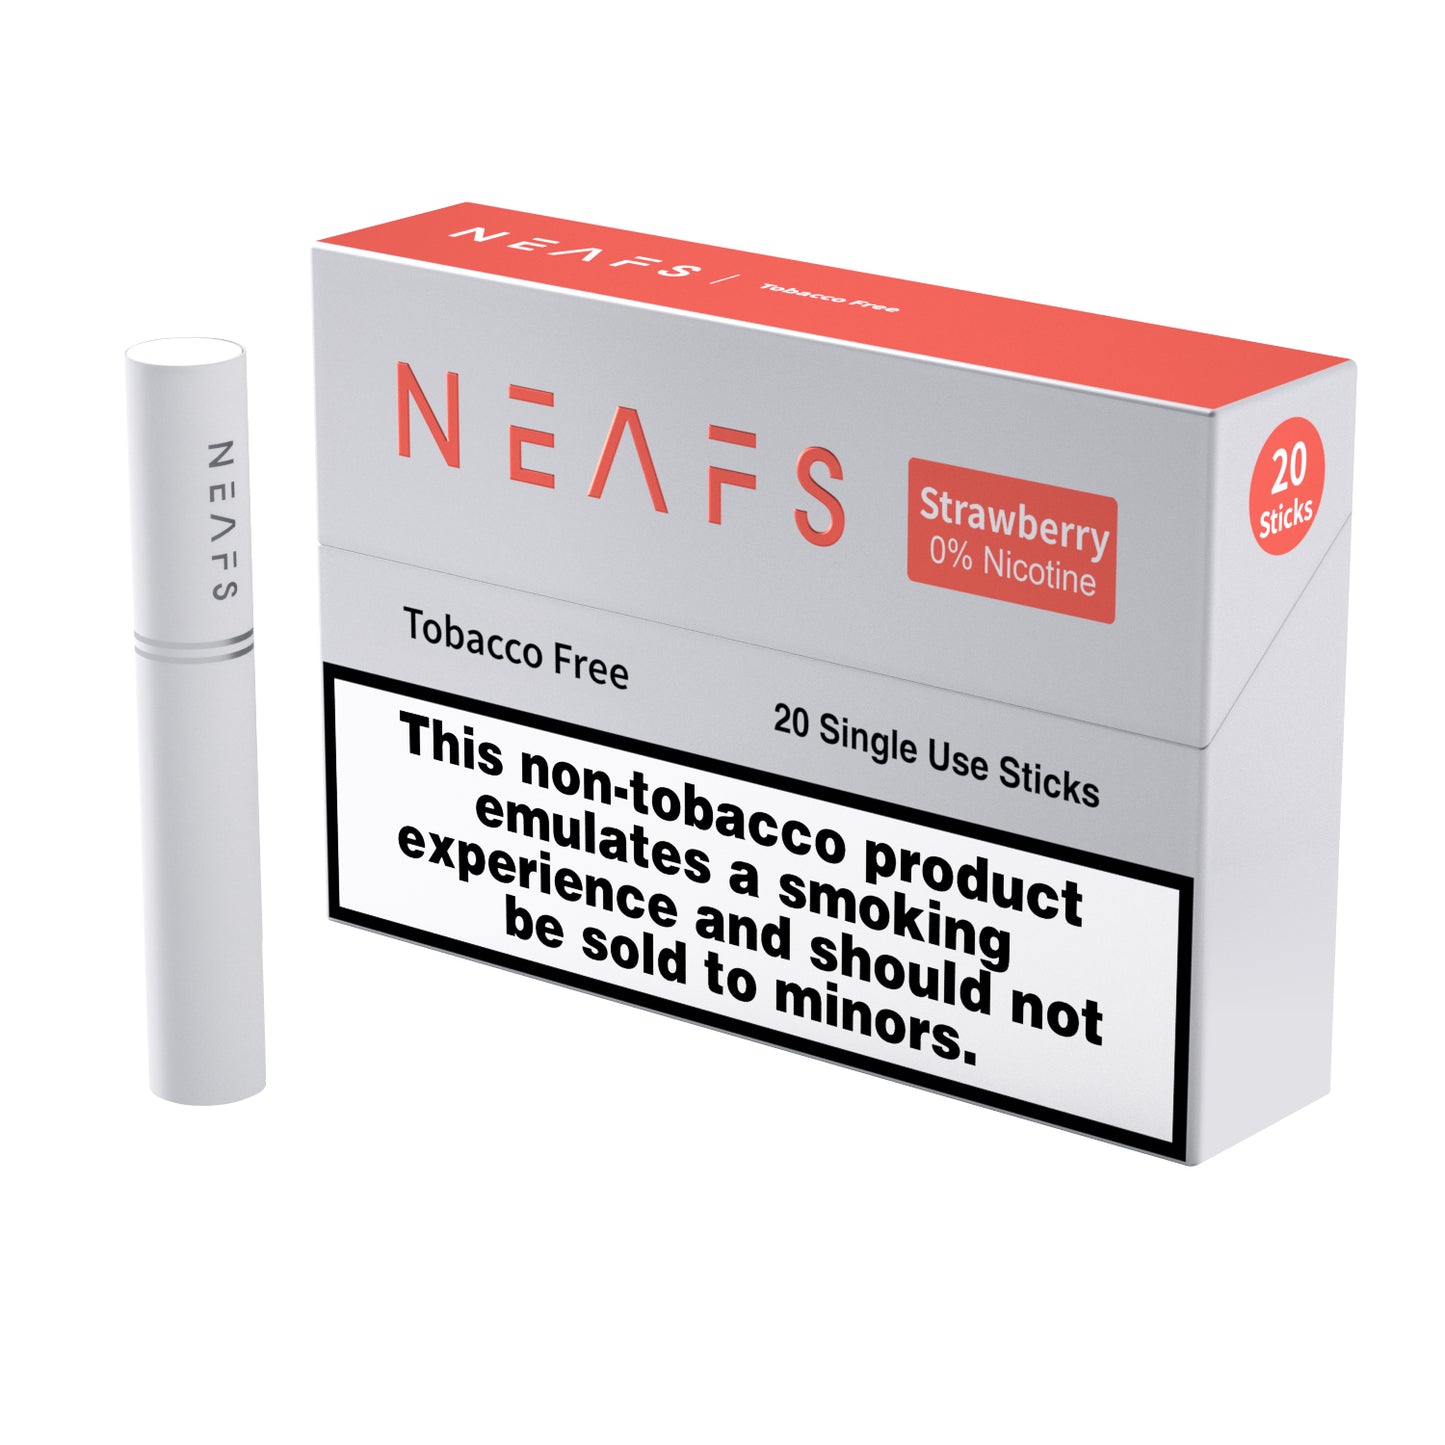 NEAFS Strawberry Tobacco Free Heated Sticks – 200 Sticks